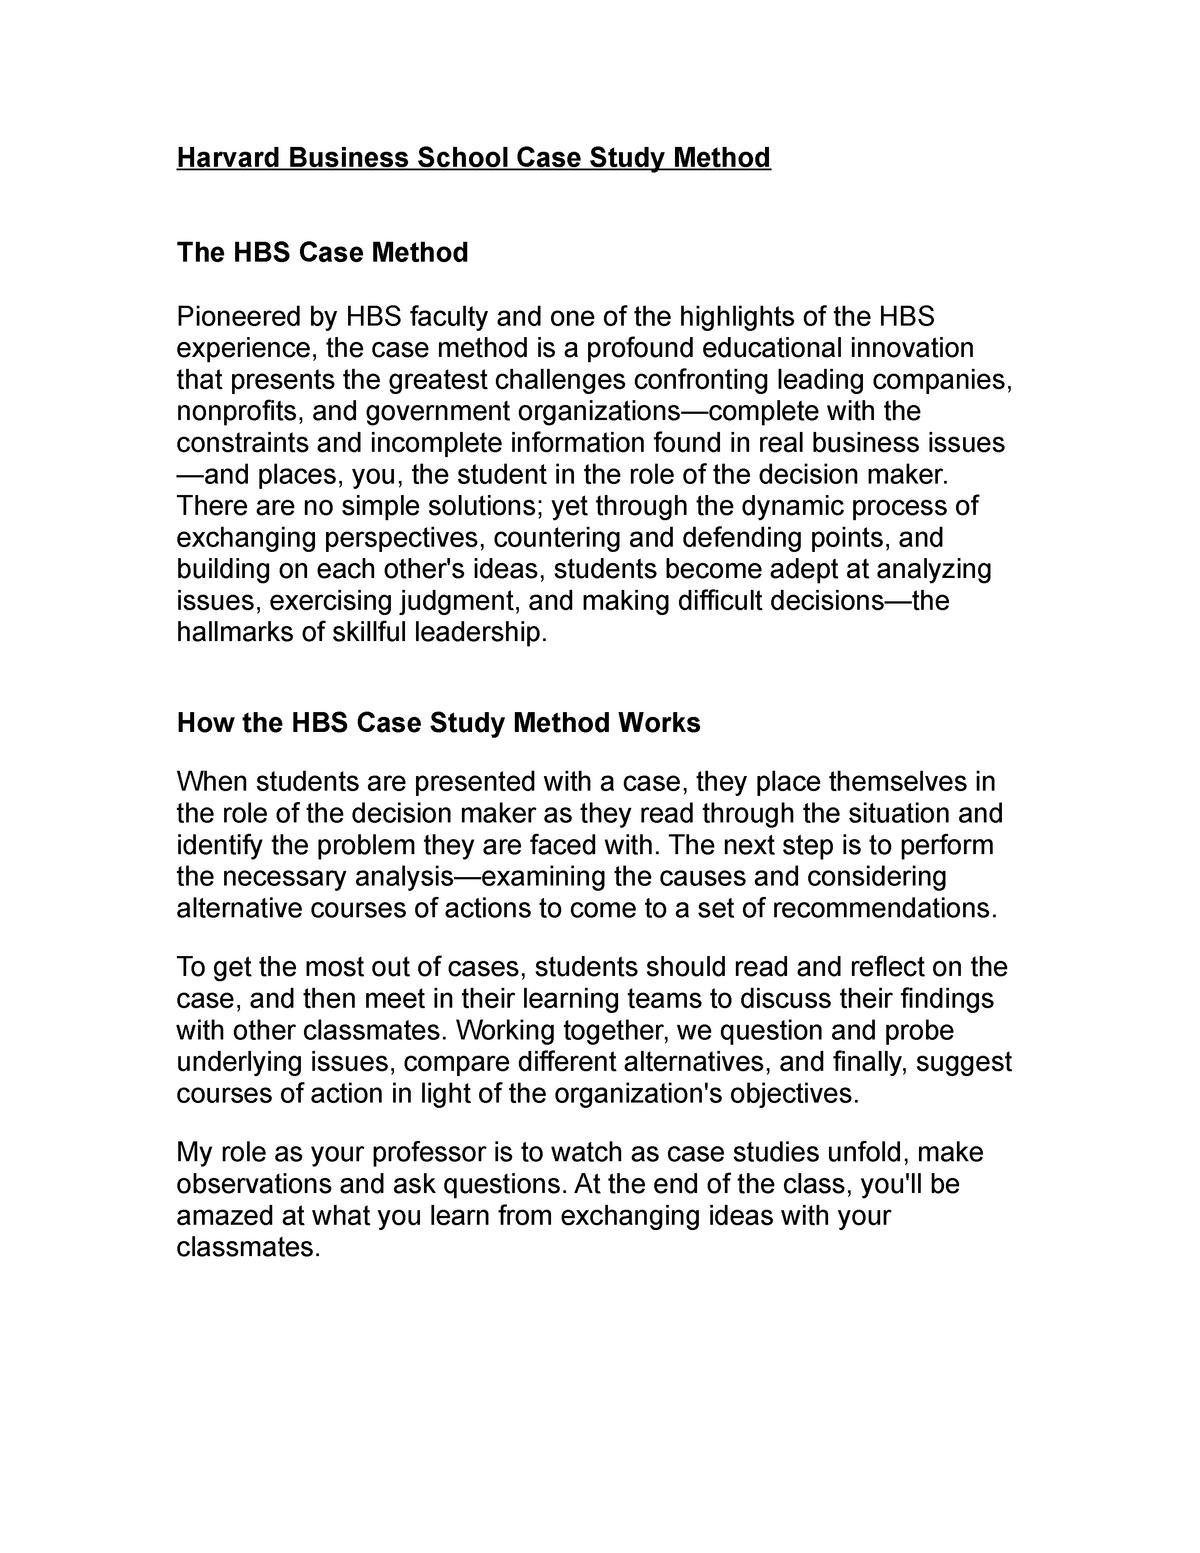 hbs case study method